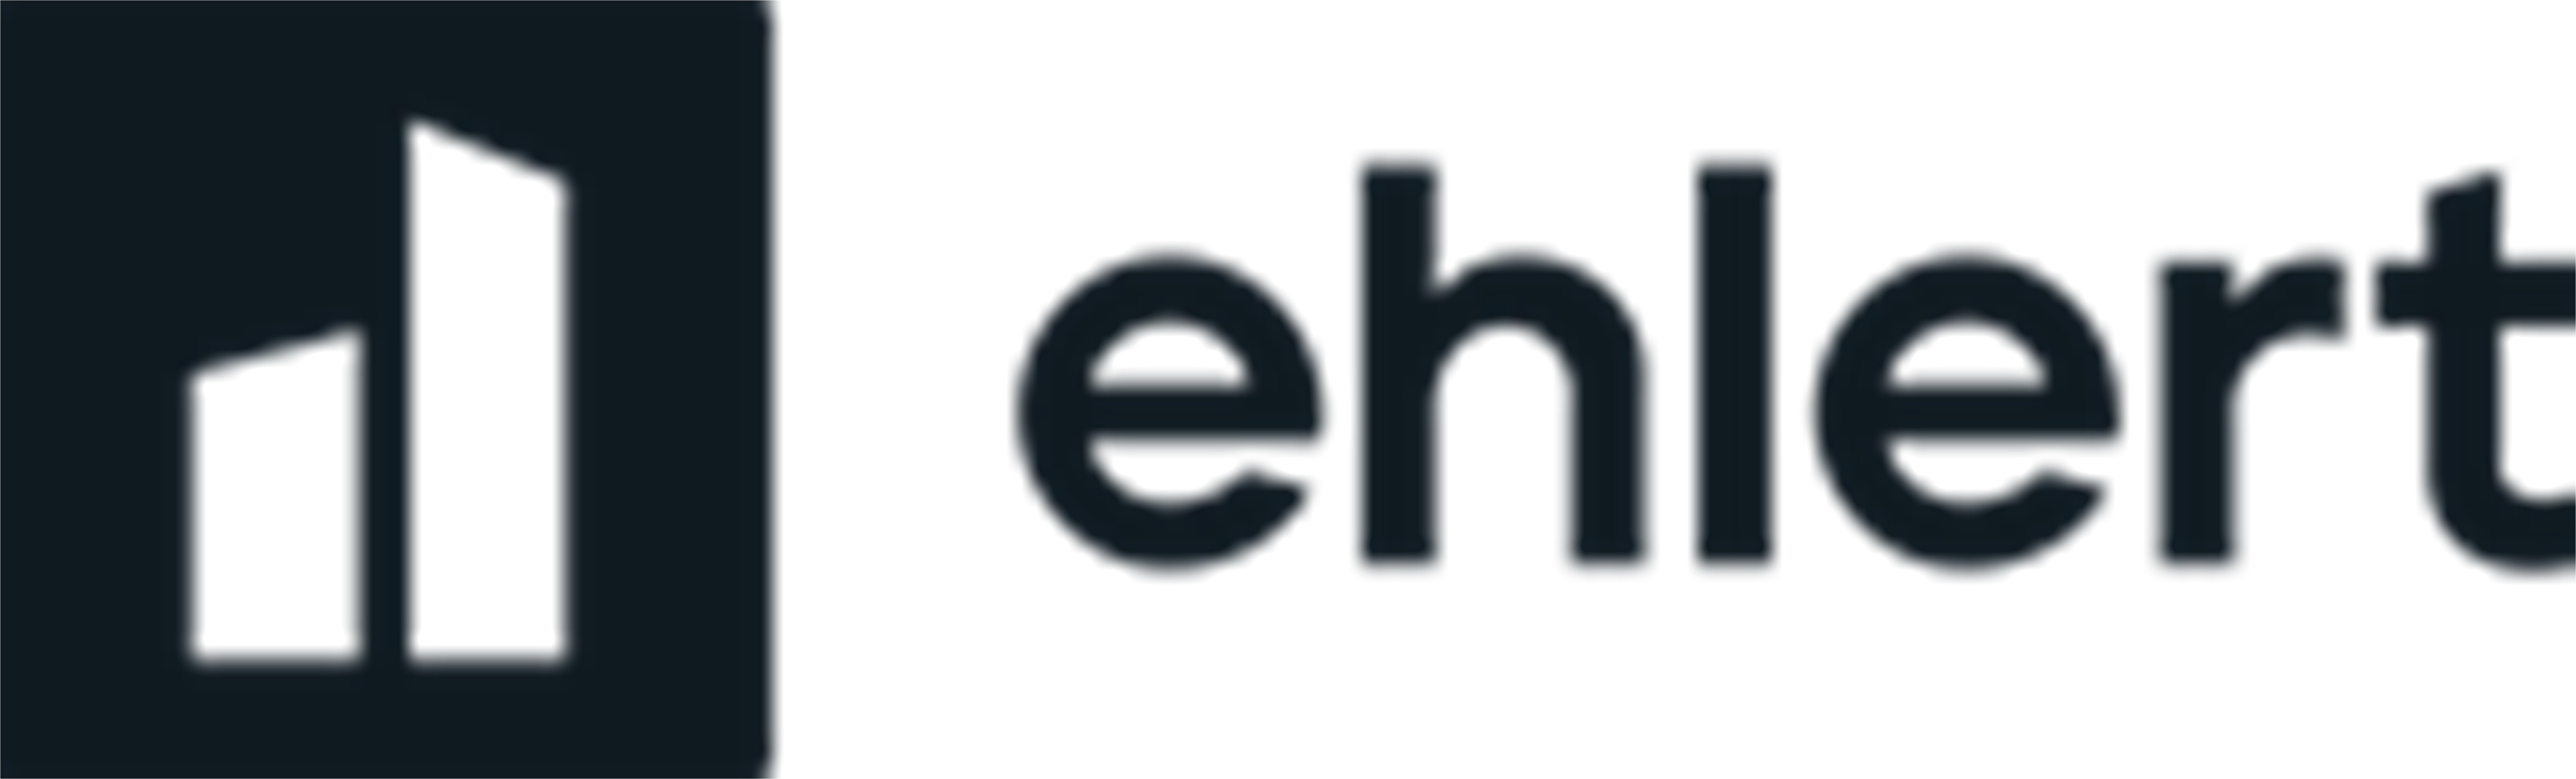 Ehlert Haustechnik GmbH